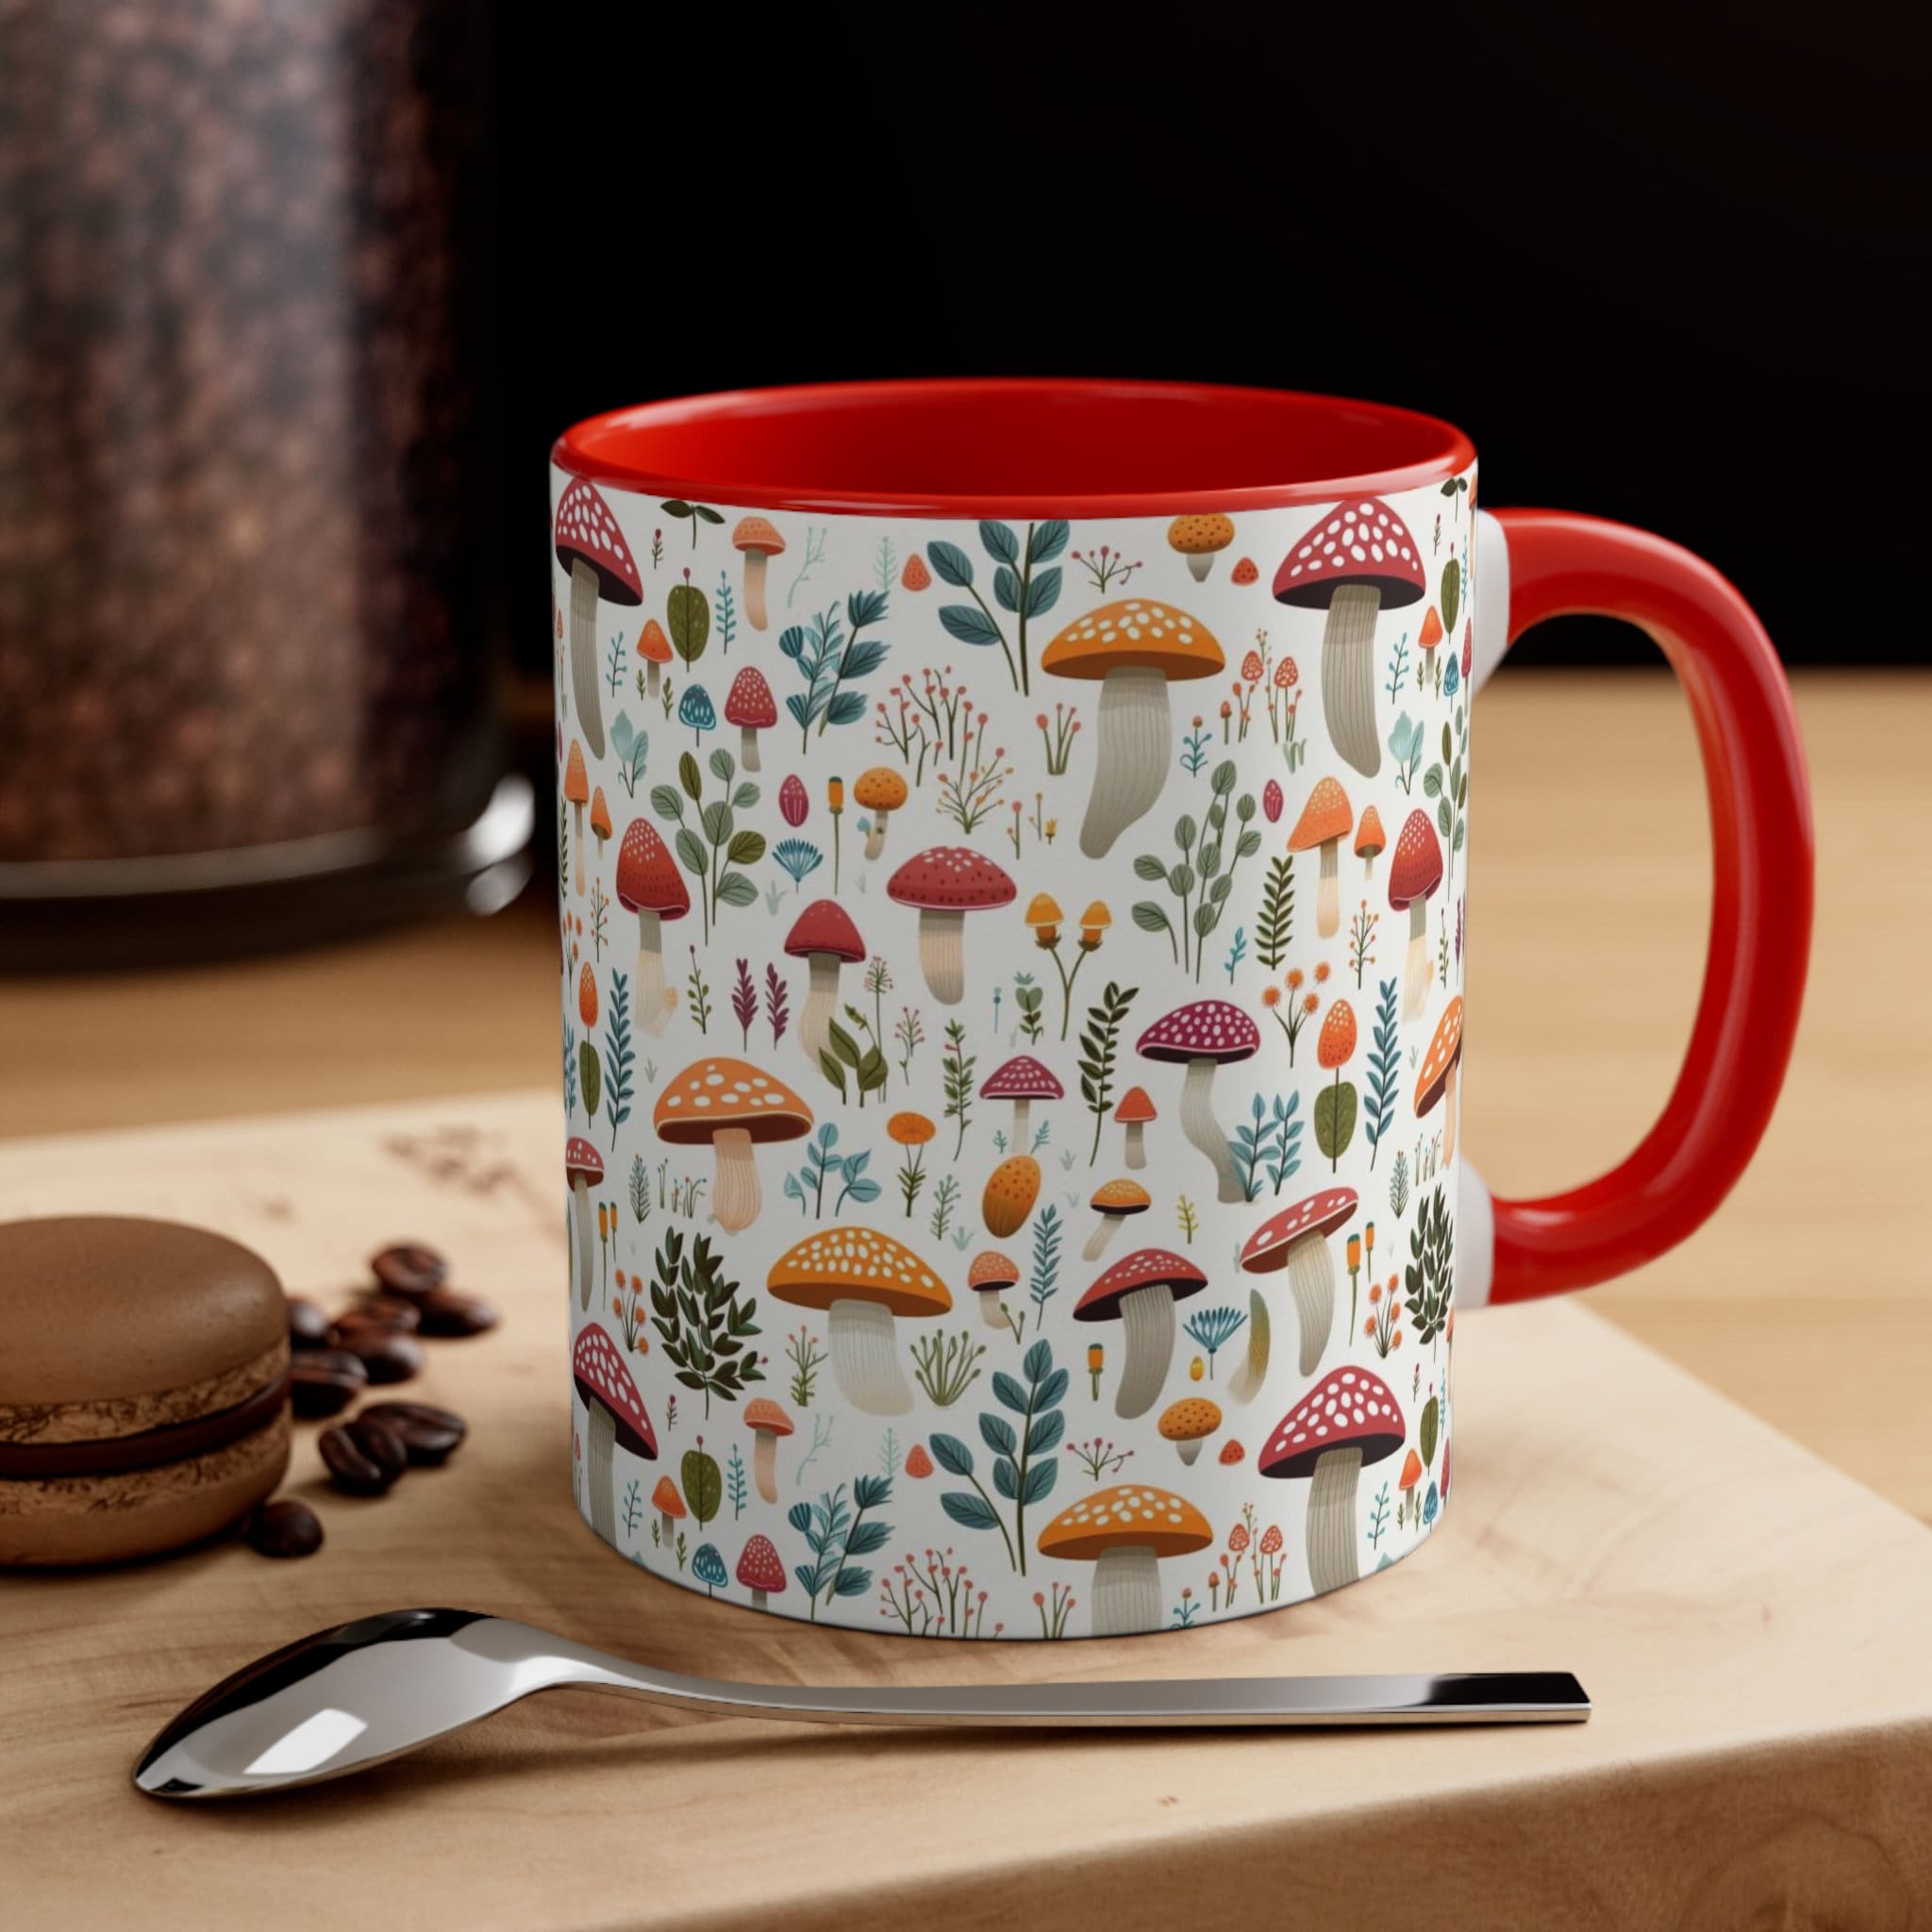 Rain House Cute Cups Mushroom Tea Cup with Tea Infuser and Spoon, Kawaii  Mushroom Mugs, Glass Teacup…See more Rain House Cute Cups Mushroom Tea Cup